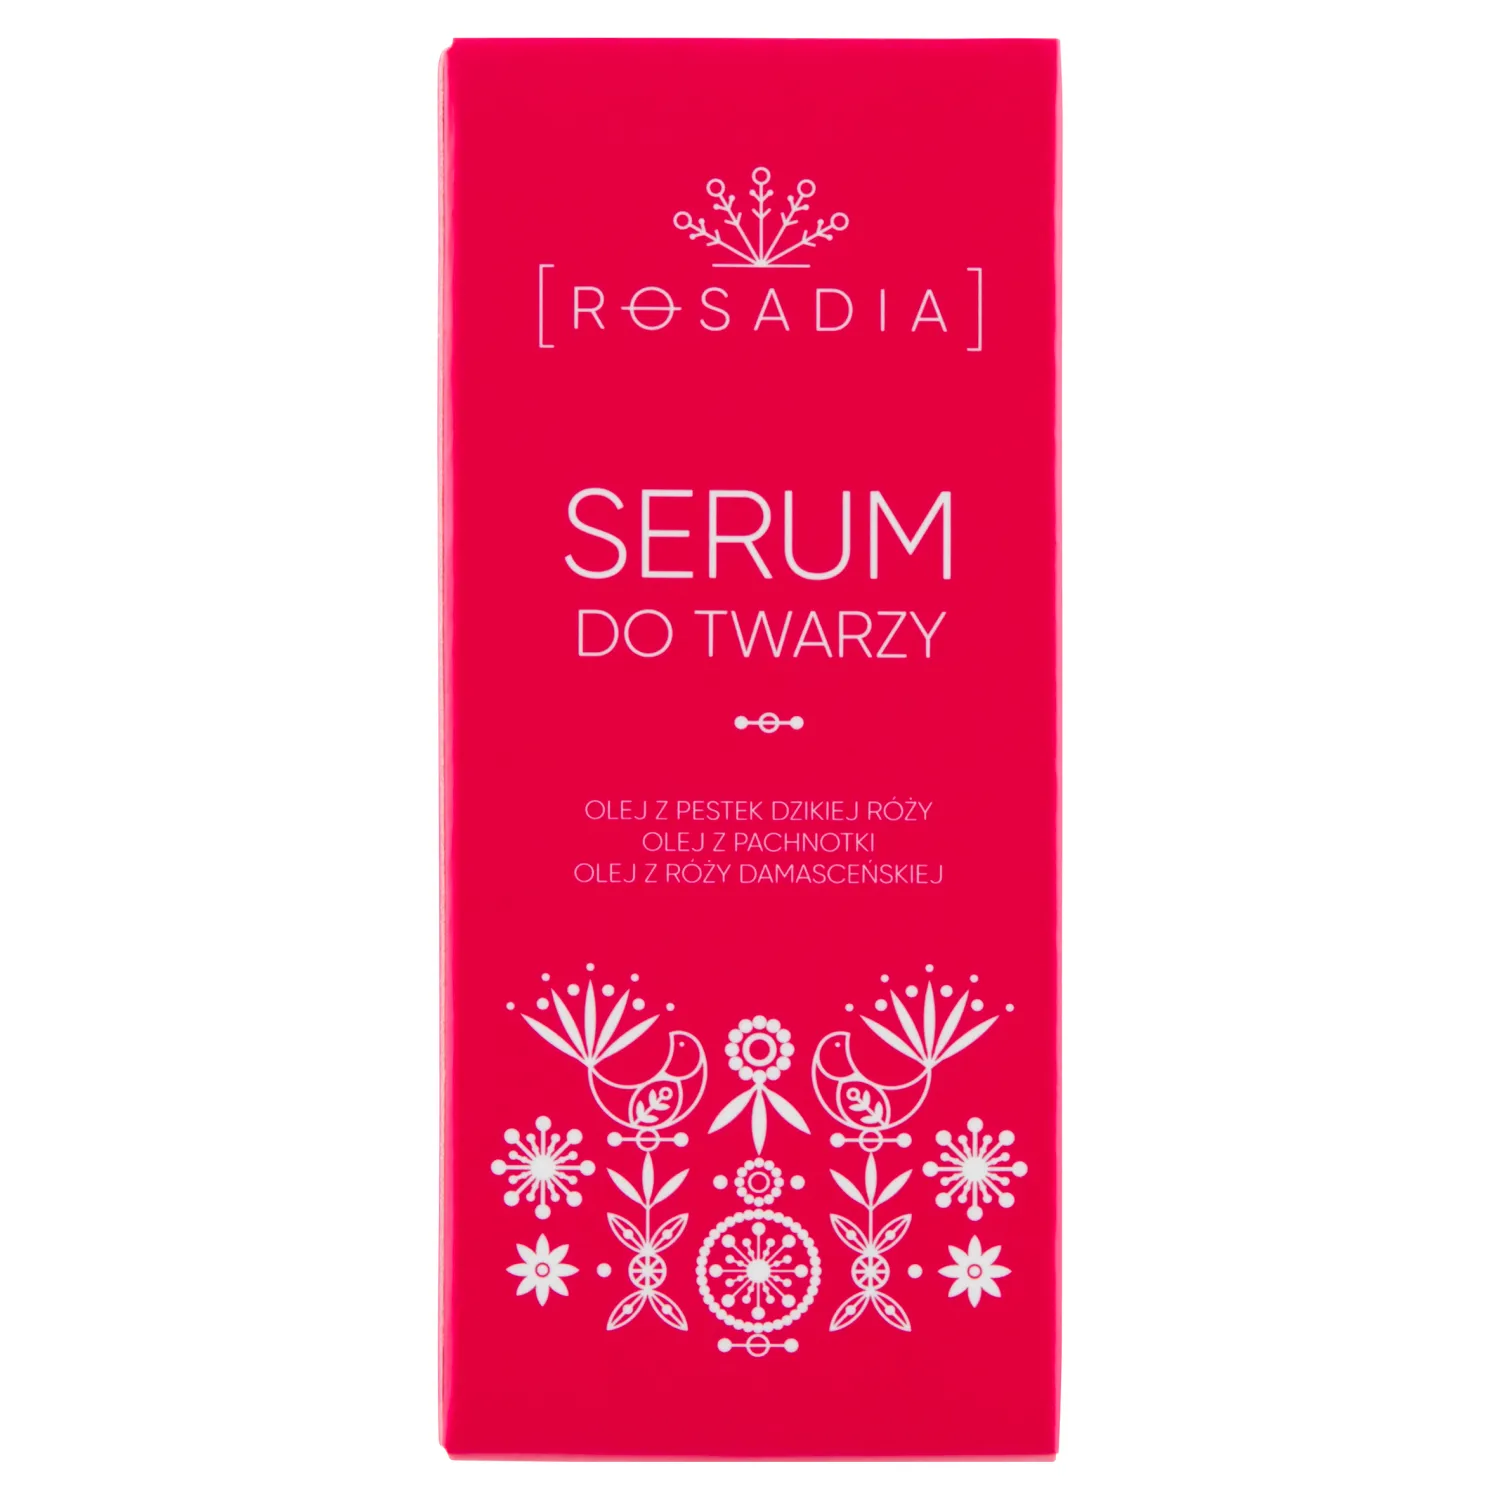 Rosadia, serum do twarzy, 30 ml